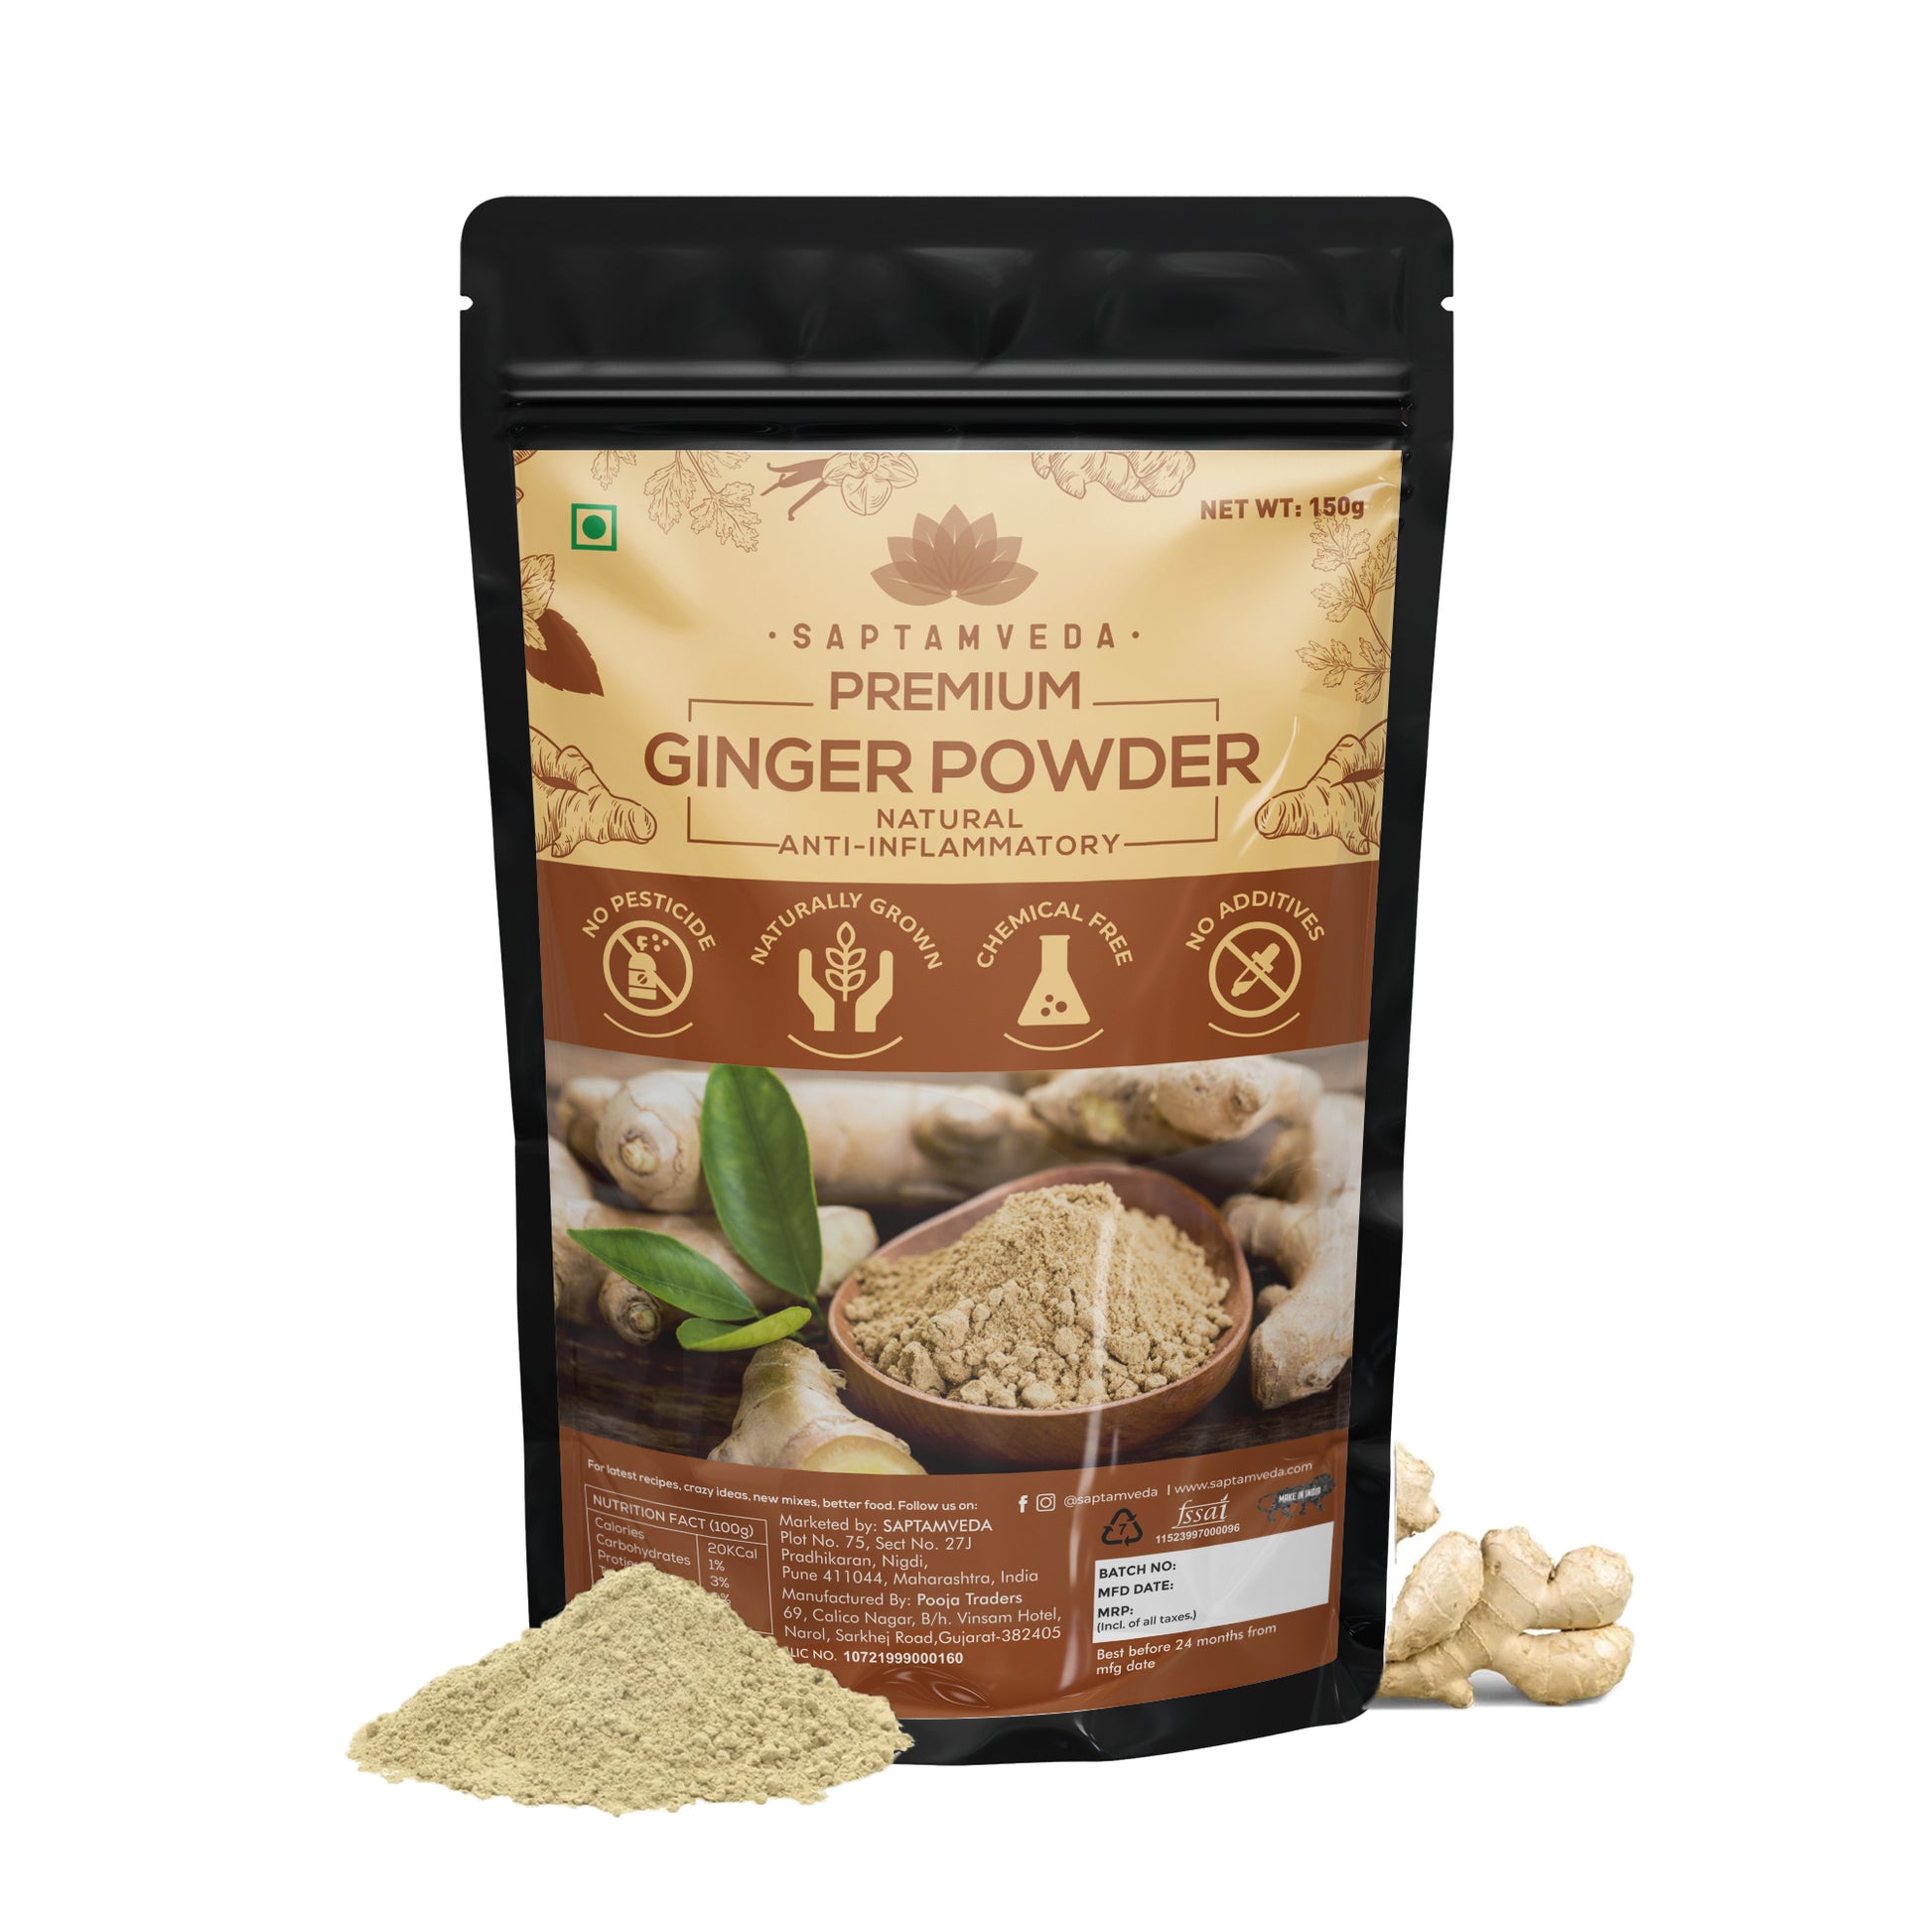 Get dry ginger powder